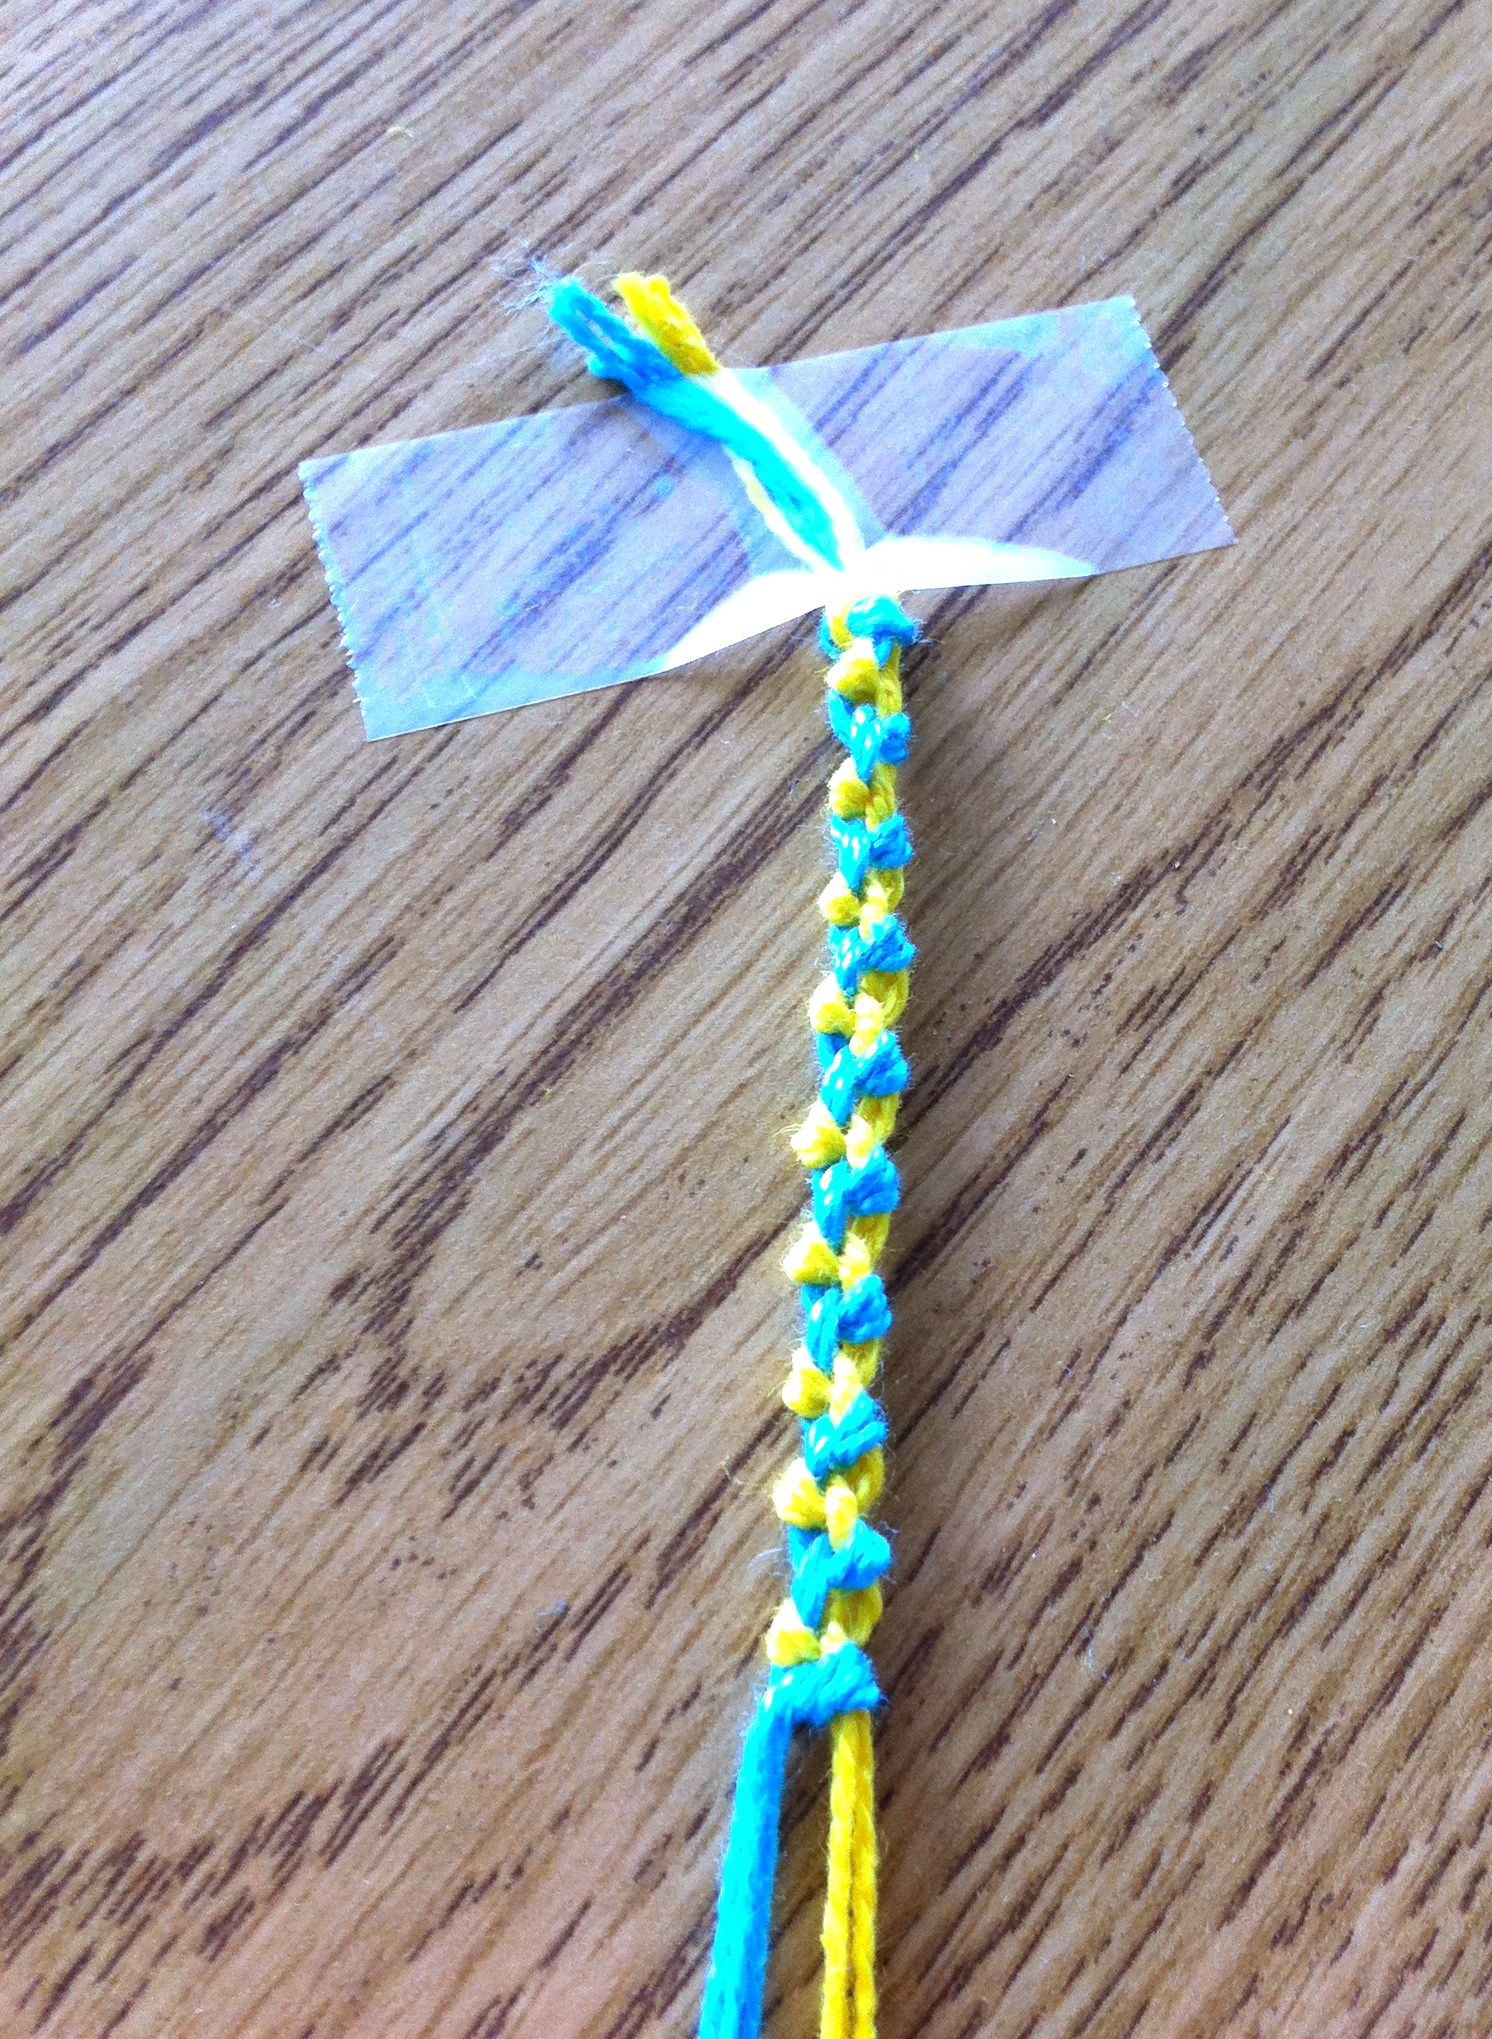 Best ideas about DIY Friendship Bracelets Patterns
. Save or Pin DIY Friendship Bracelet Tutorial Crafts Now.